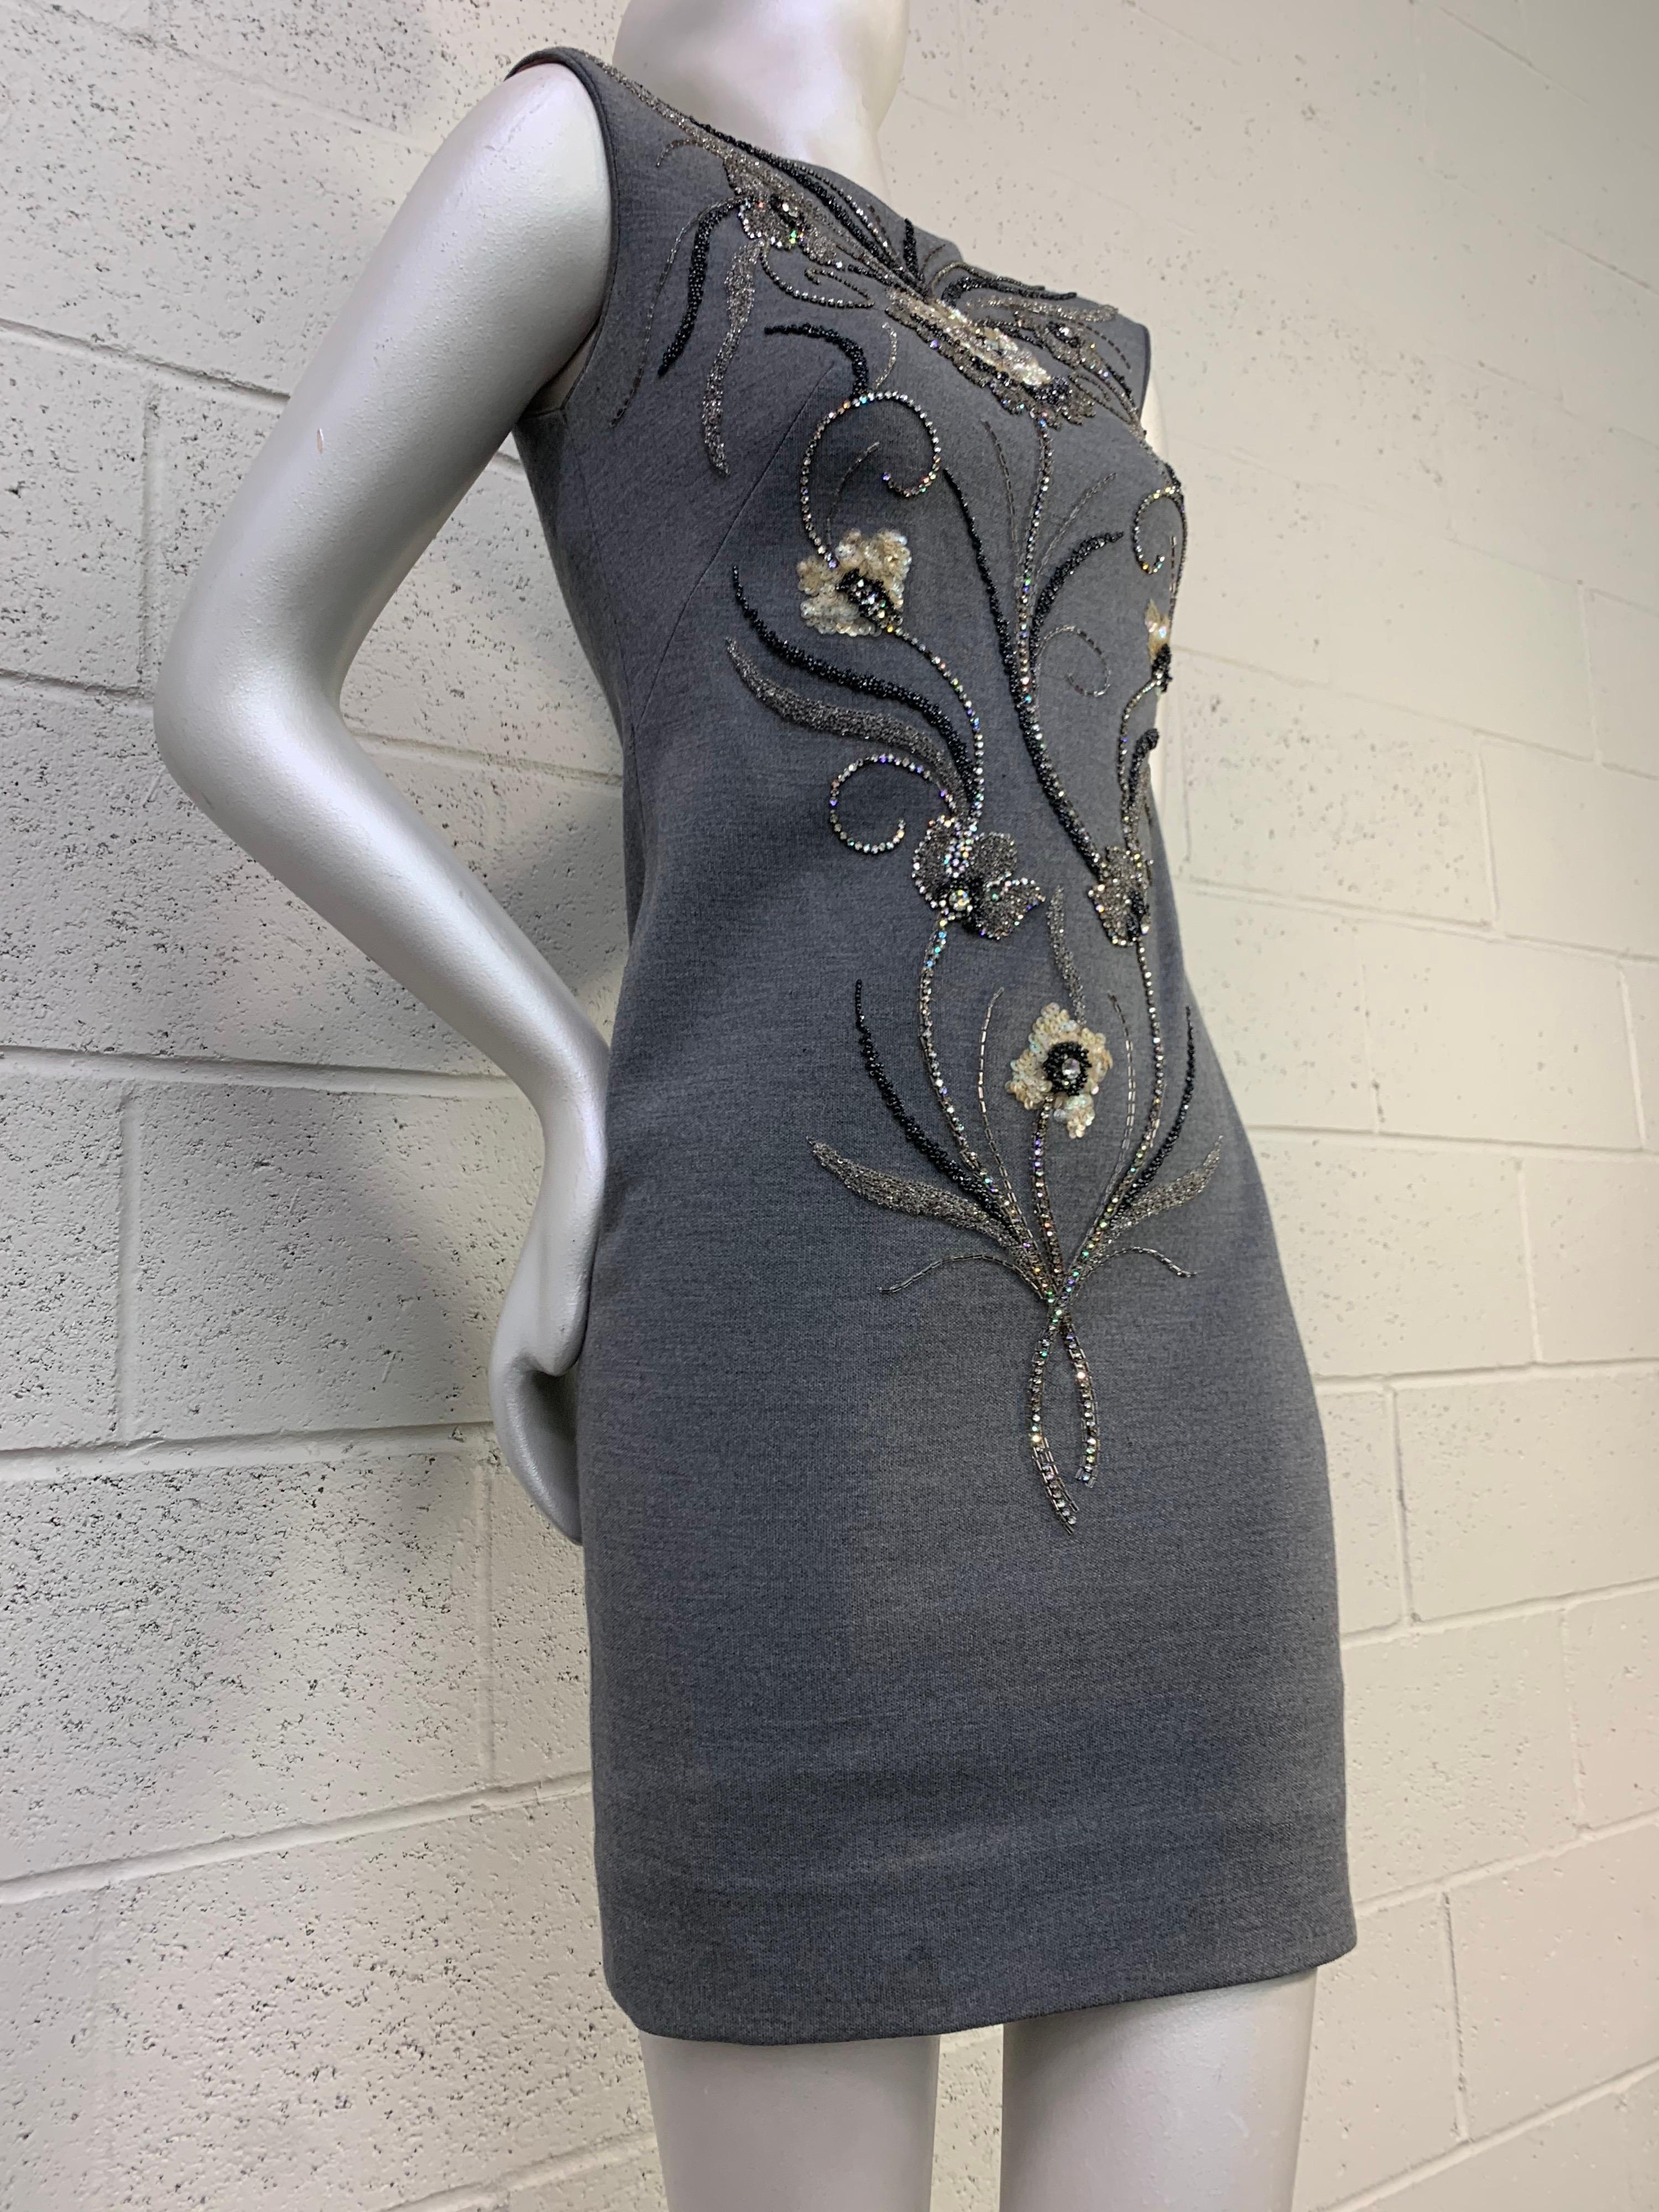 1960s Mr. Blackwell Gray Wool Knit Mini Dress w/ Fabulous Metallic Jewel Florals: Sleeveless, fully lined and gorgeous. Size 4. 